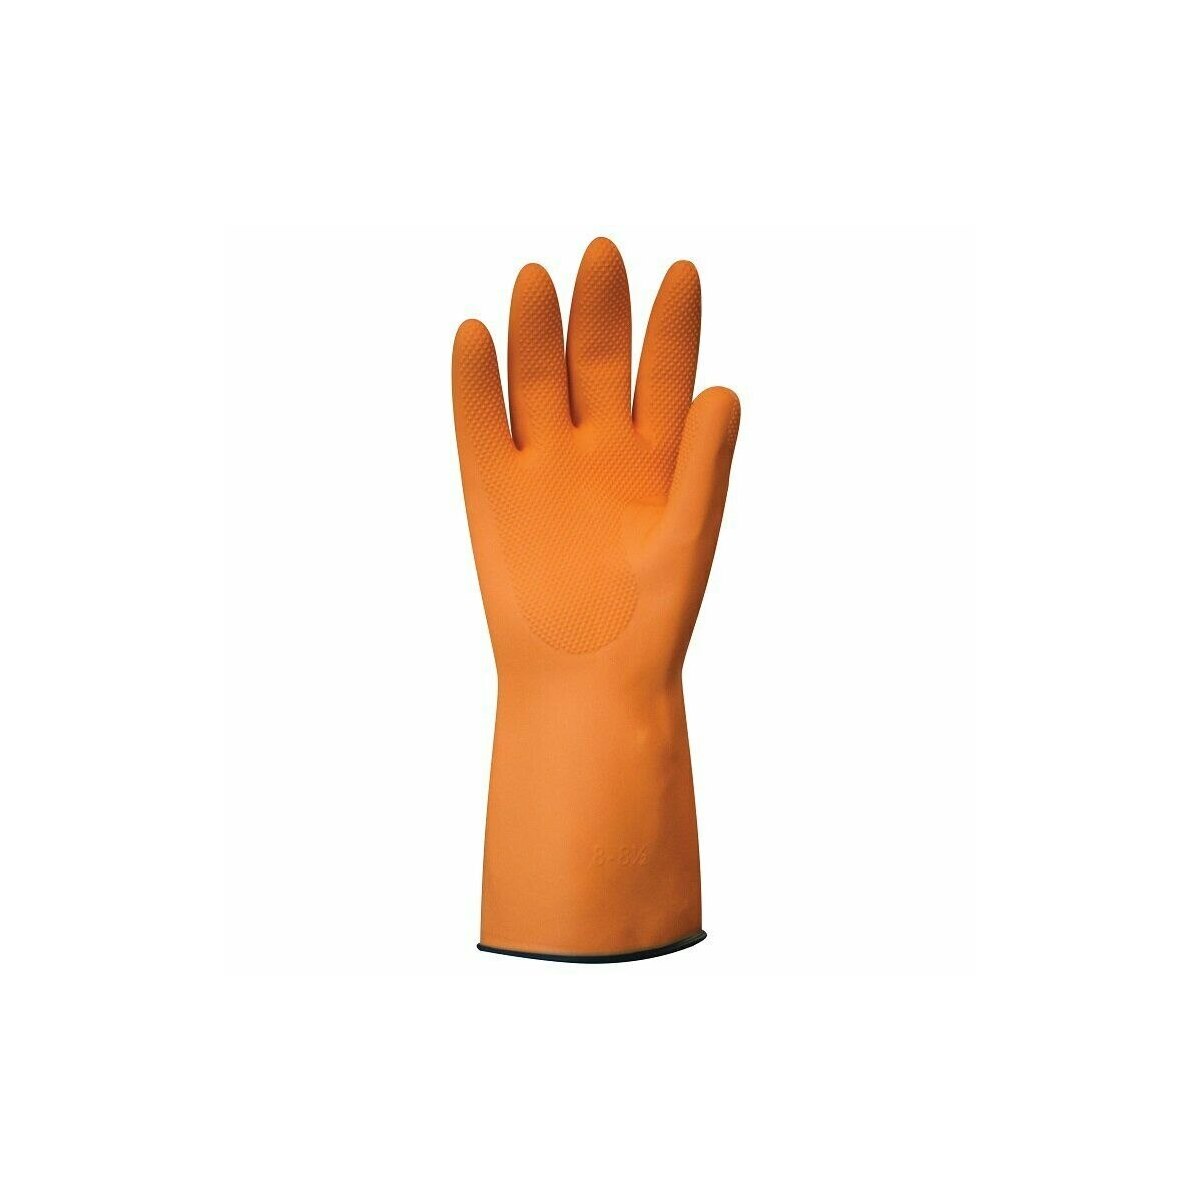 Extra Tough Household Gloves